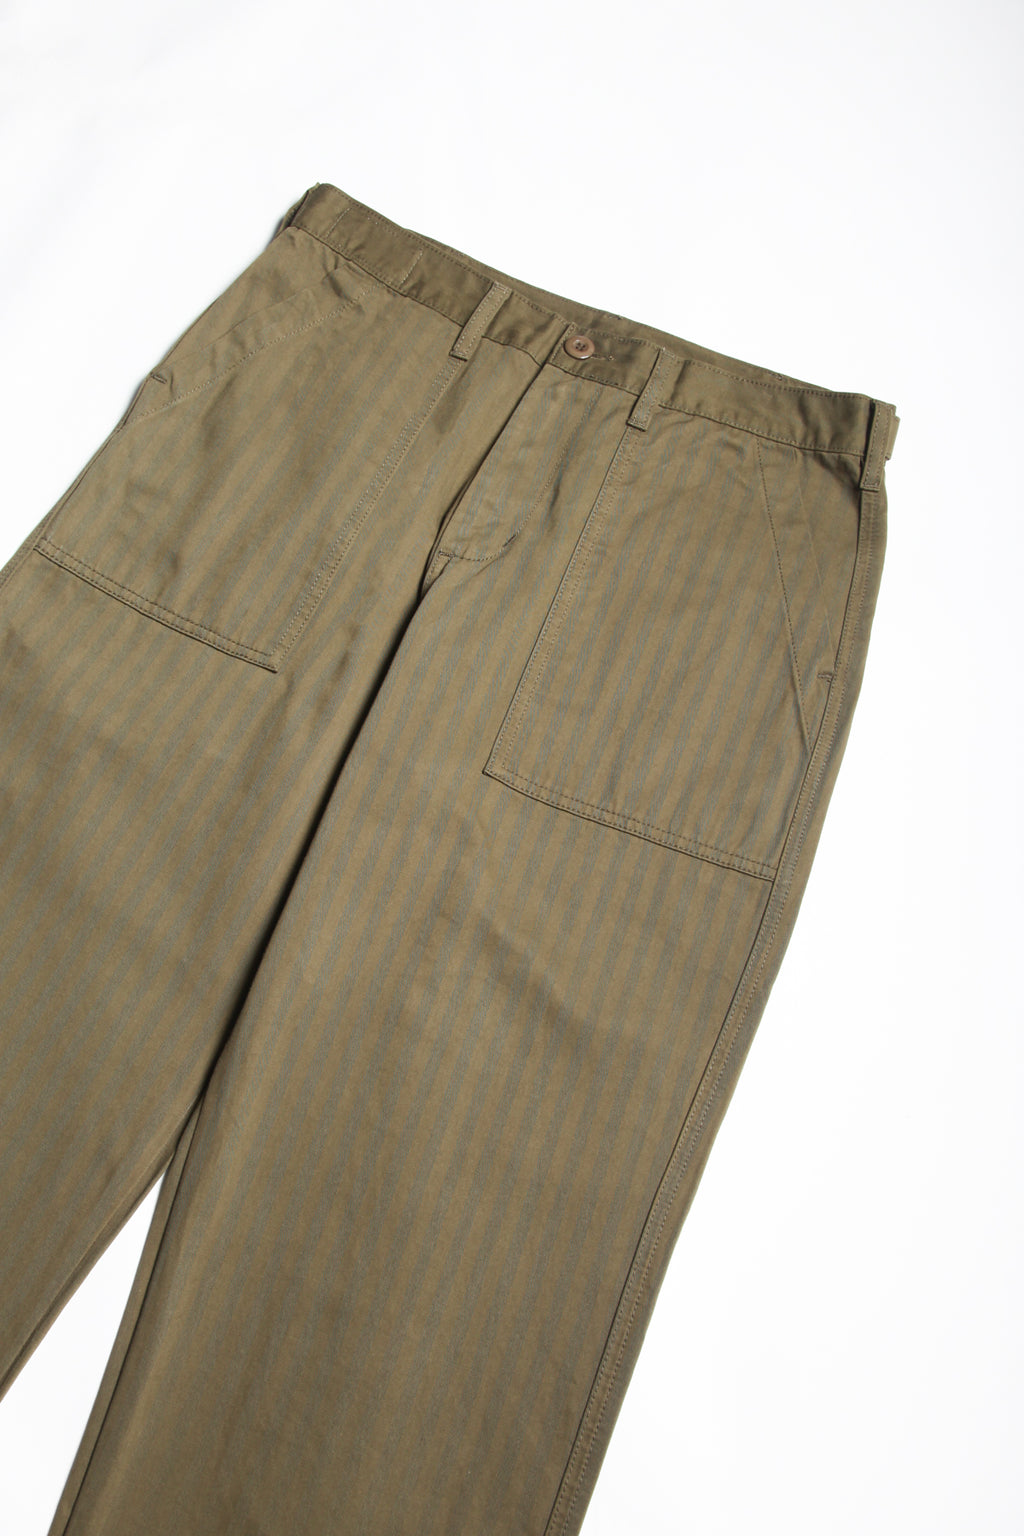 Okonkwo MFG - OG107 Fatigue Pants - Olive Herringbone | Blacksmith Store